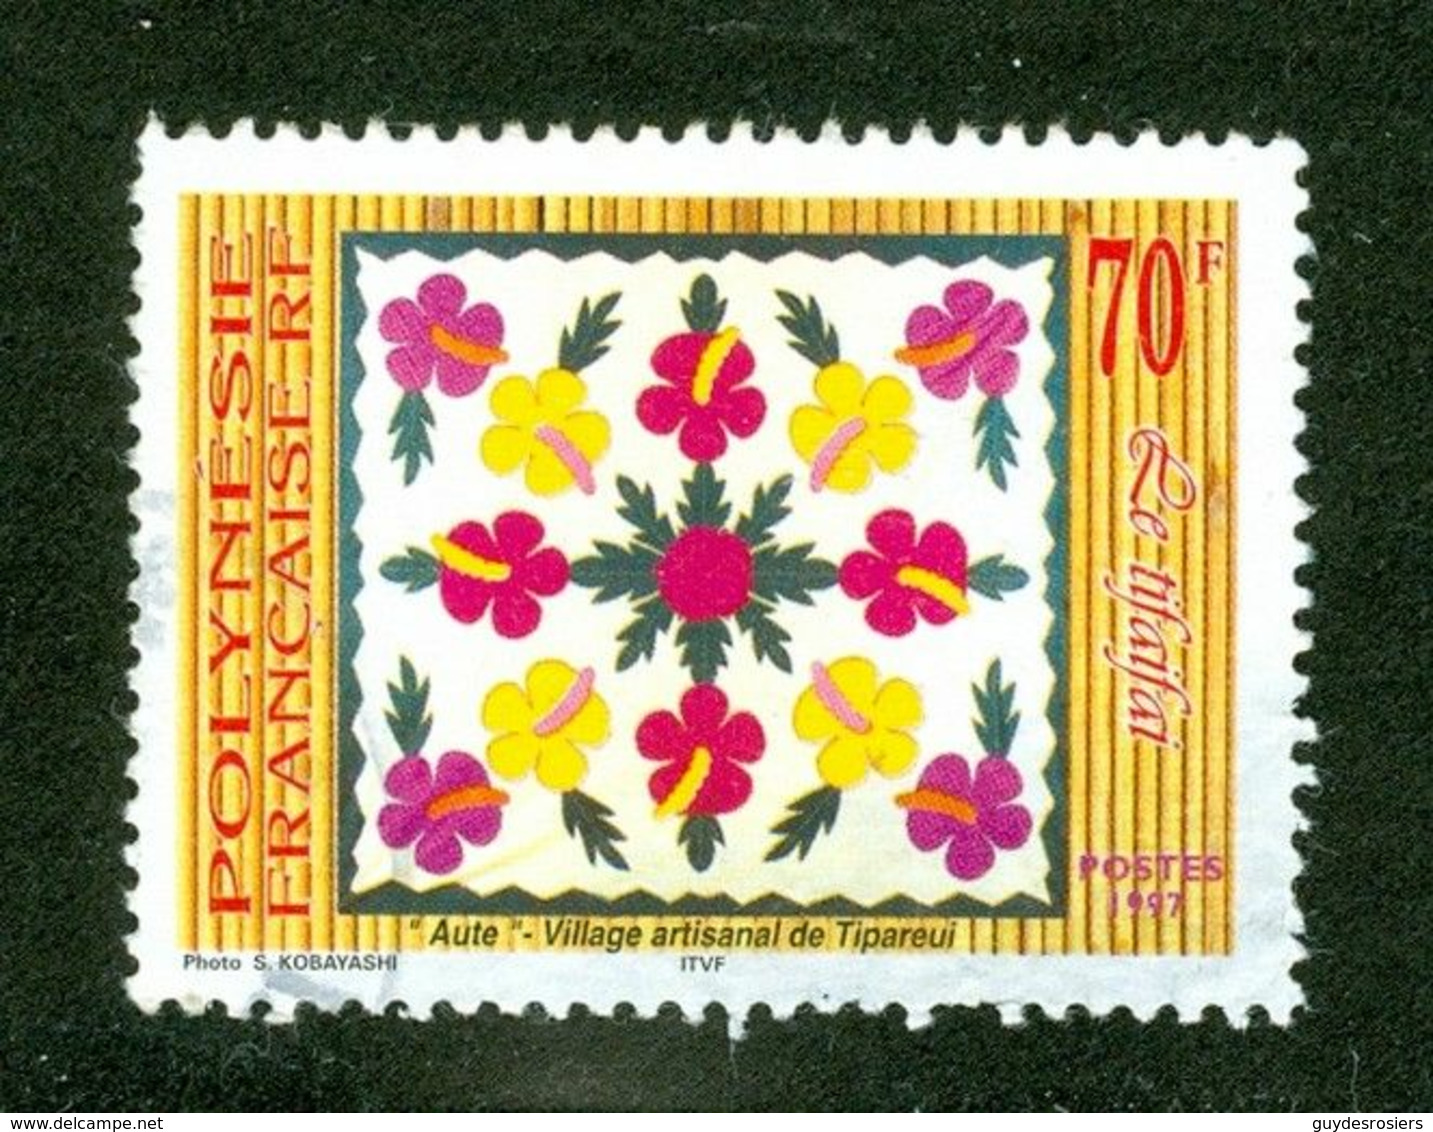 Village Artisanal De Tipareuil, Polynésie Française / French Polynesia; Scott # 704; Usagé (3446) - Used Stamps